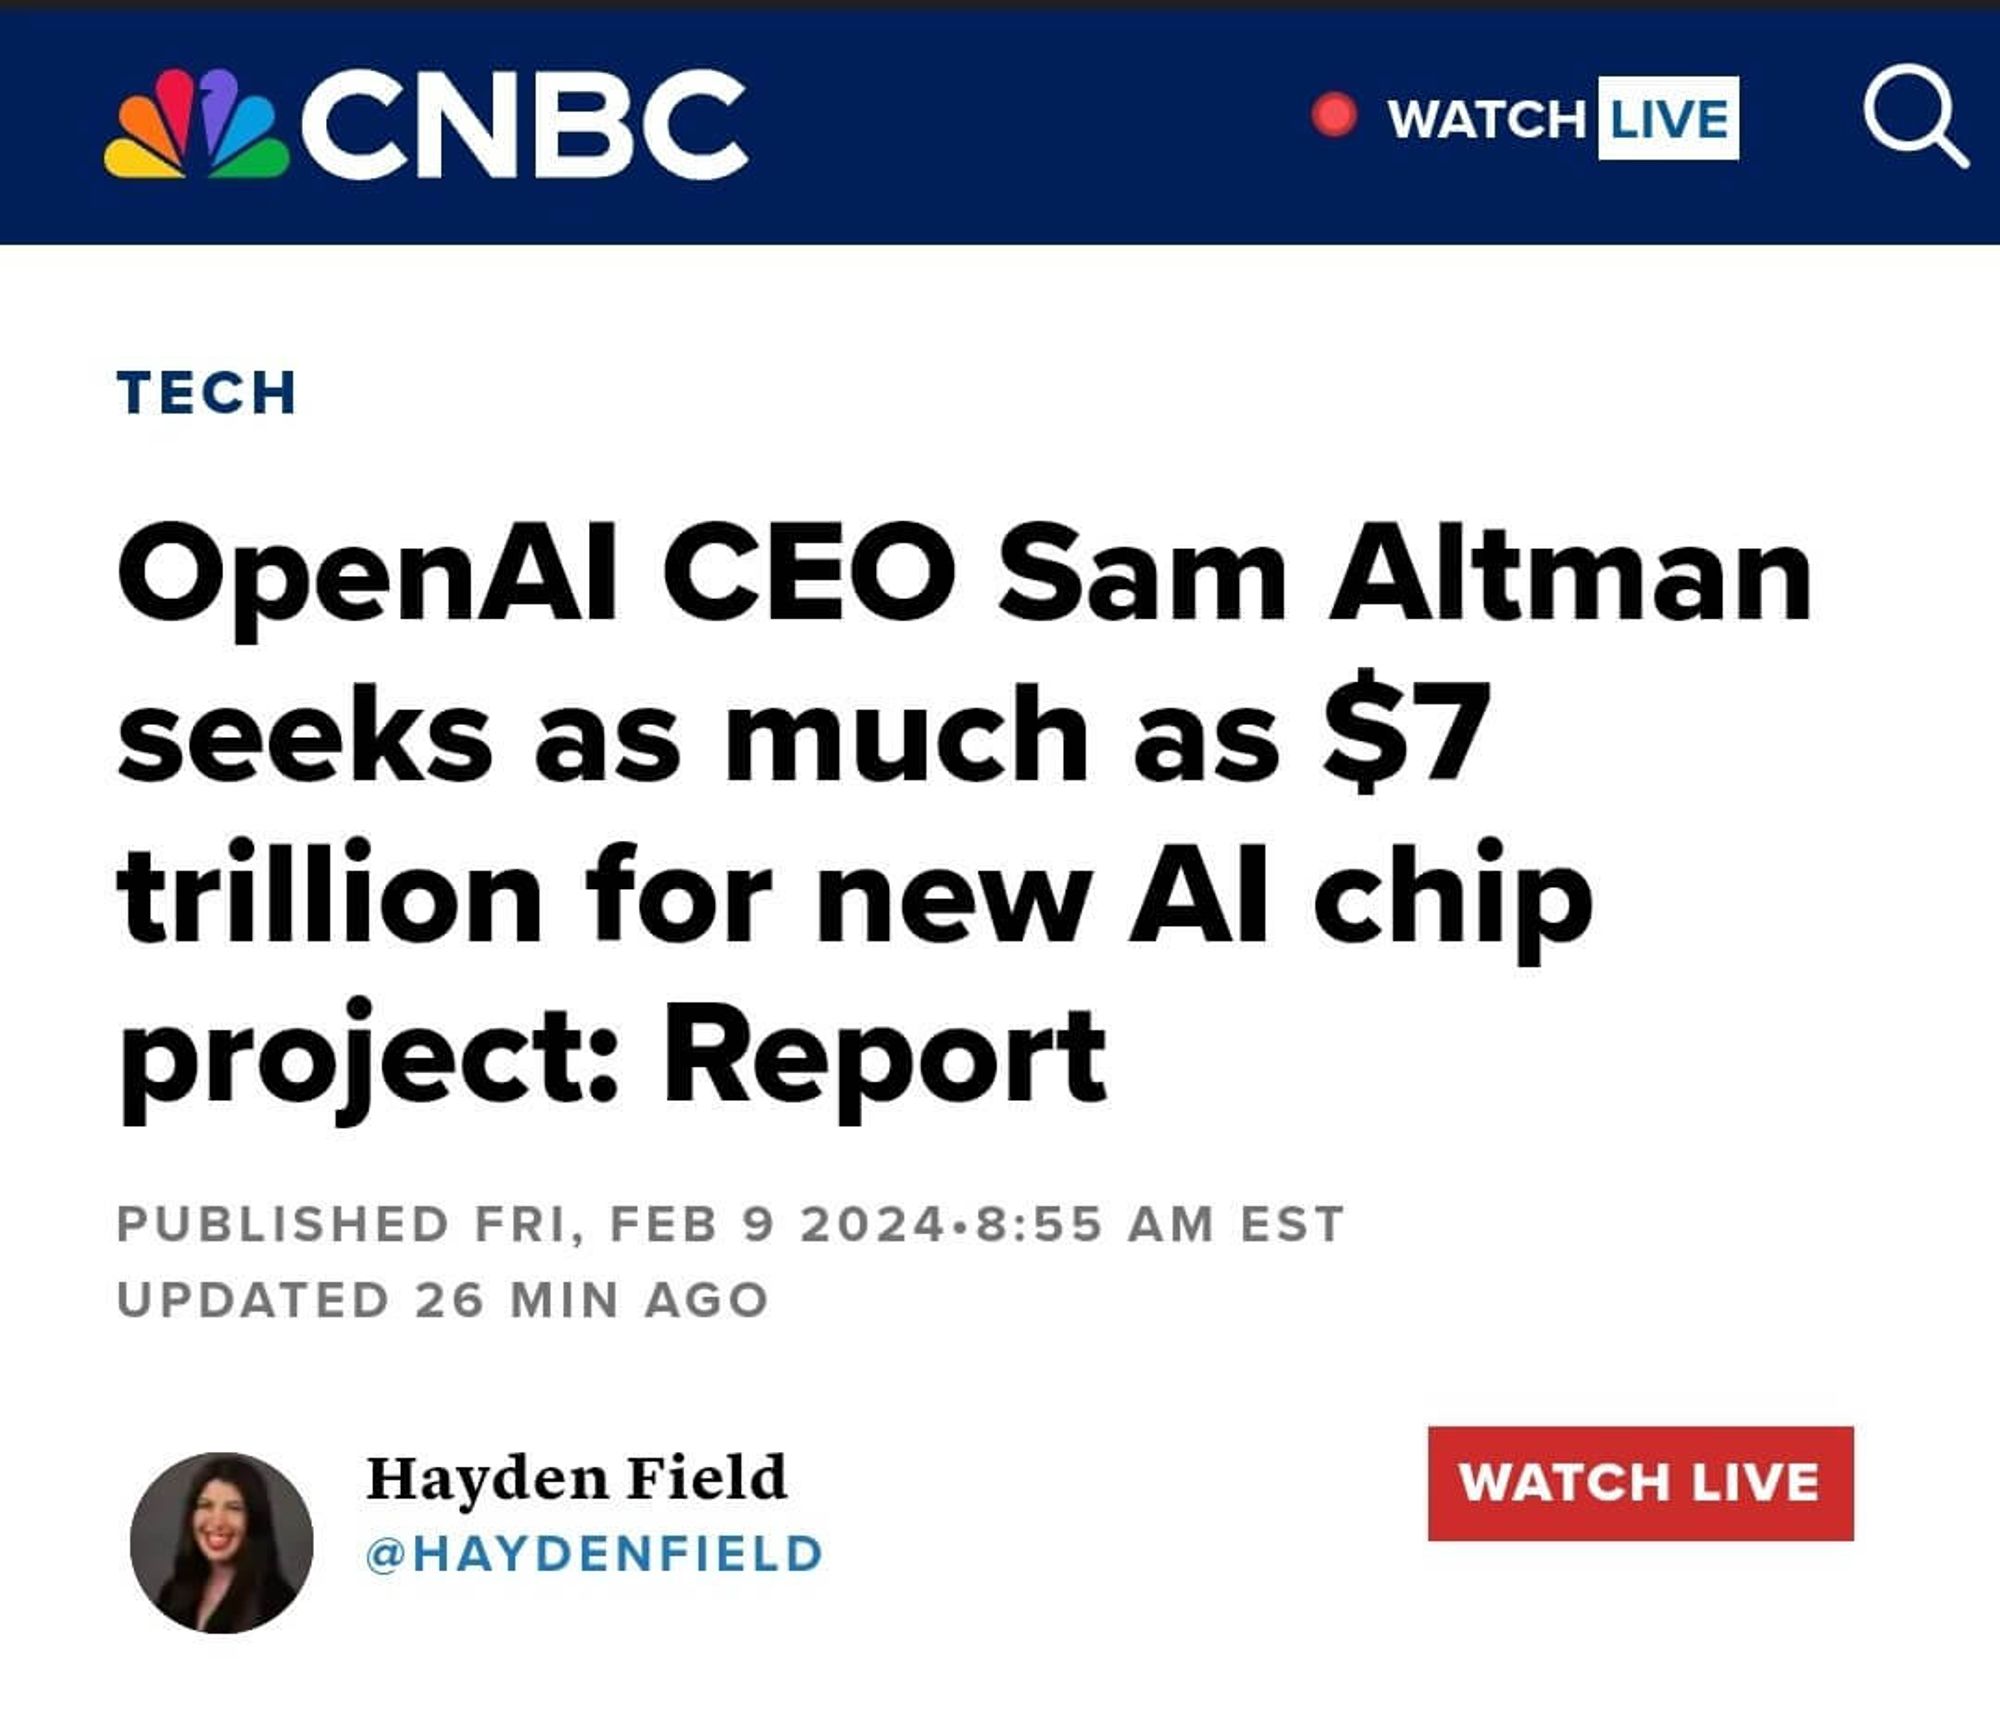 Sam Altman is raising $7T for Chip Company